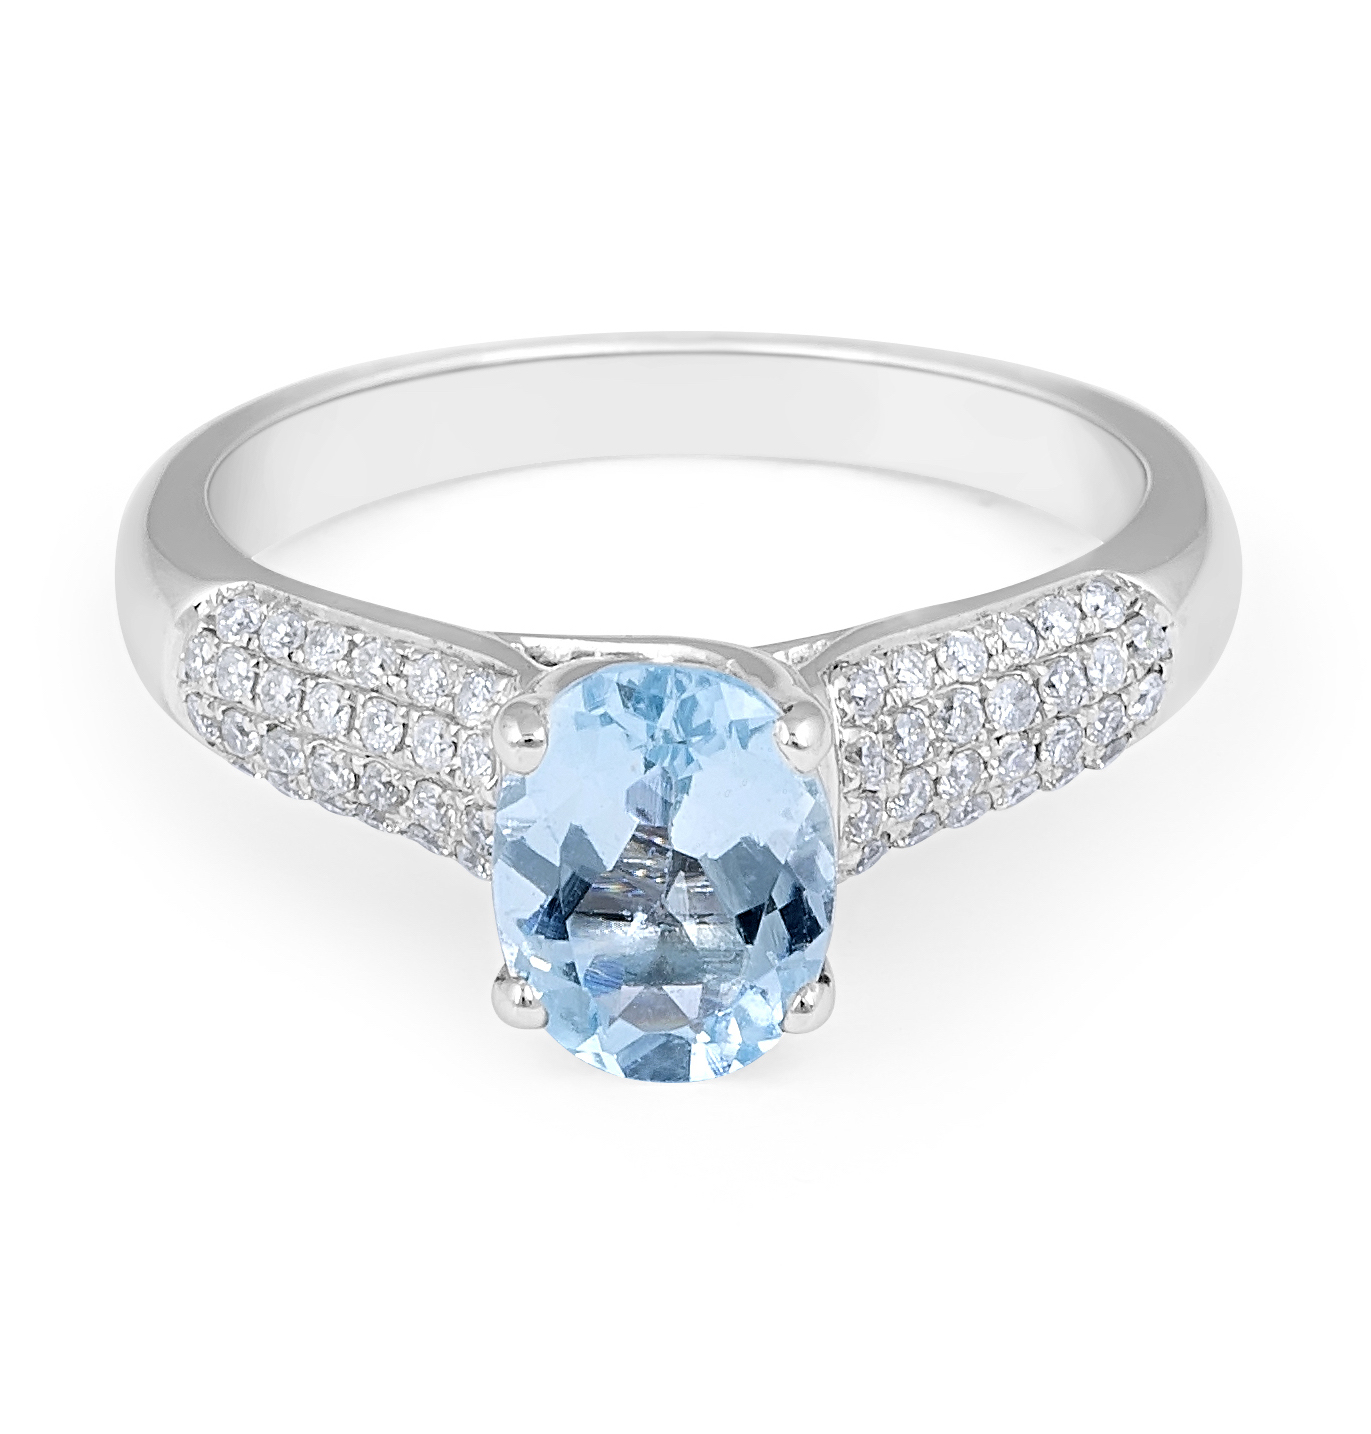 Aquamarine Diamond Engagement Ring in Micro-Pave Setting Diamond rings